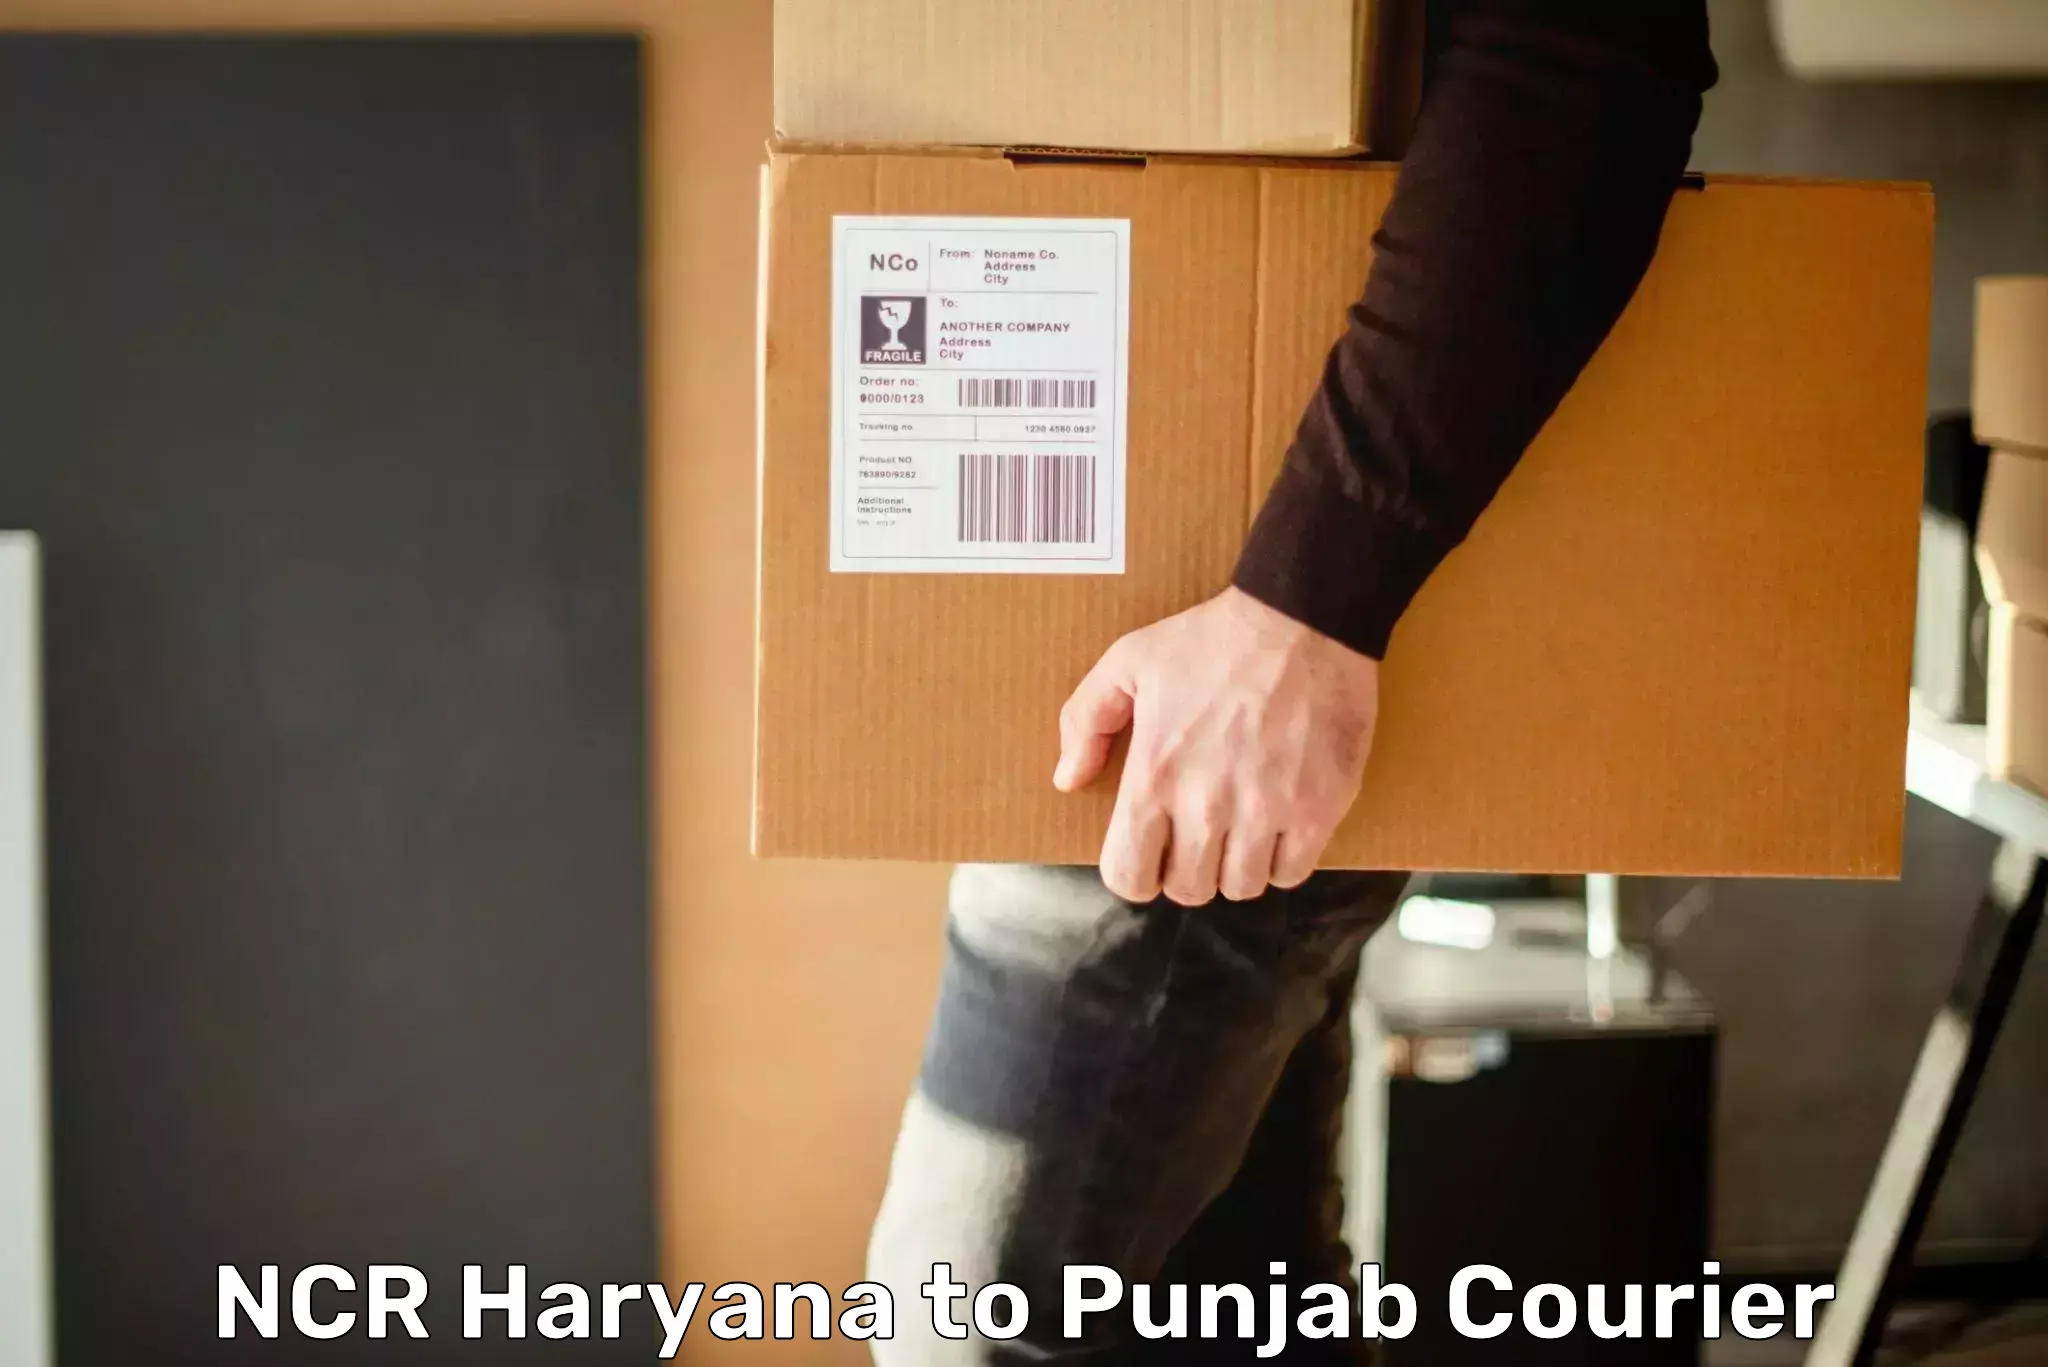 Courier service comparison NCR Haryana to Bathinda